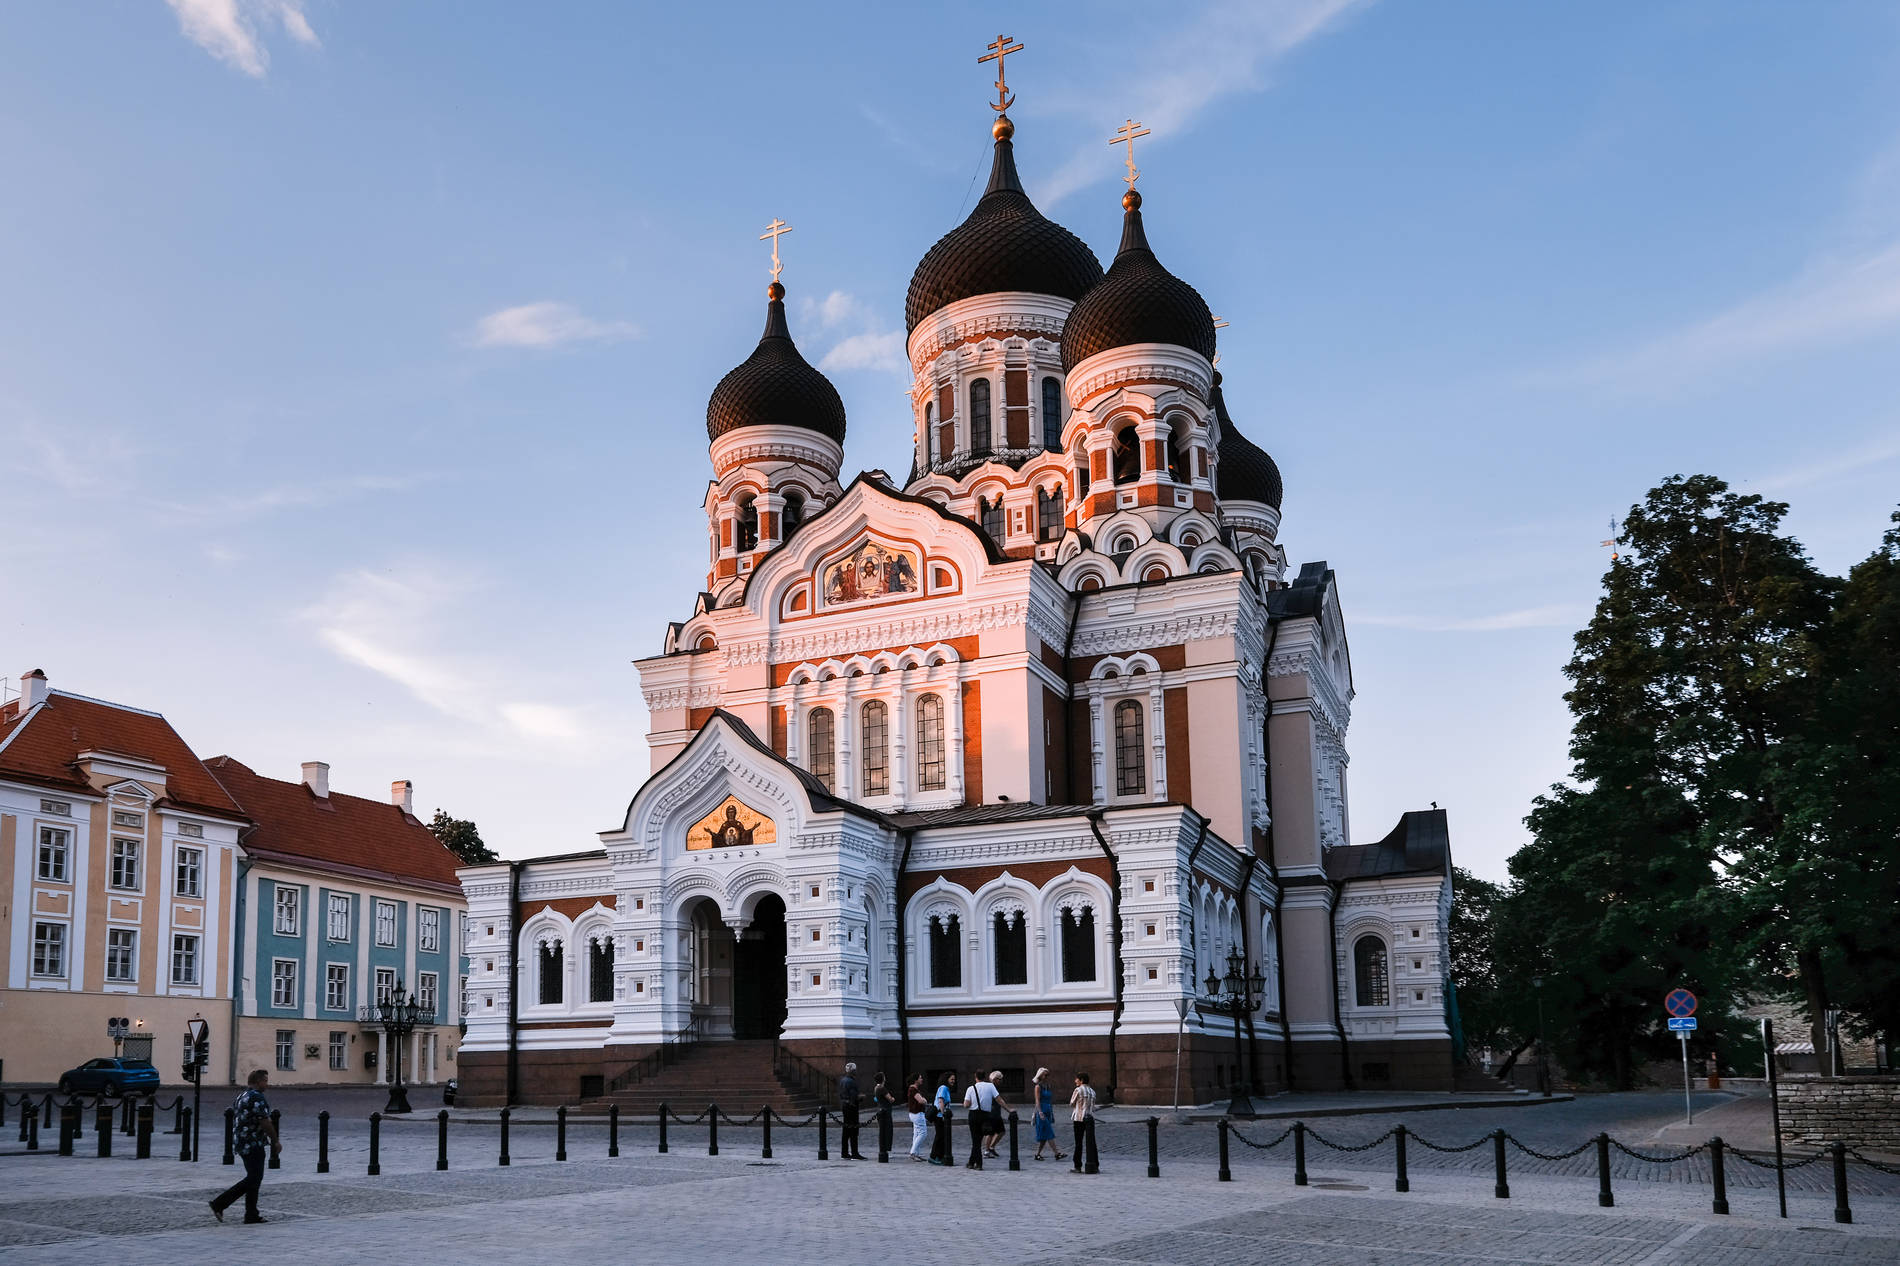 Cathedral in Tallinn, Estonia